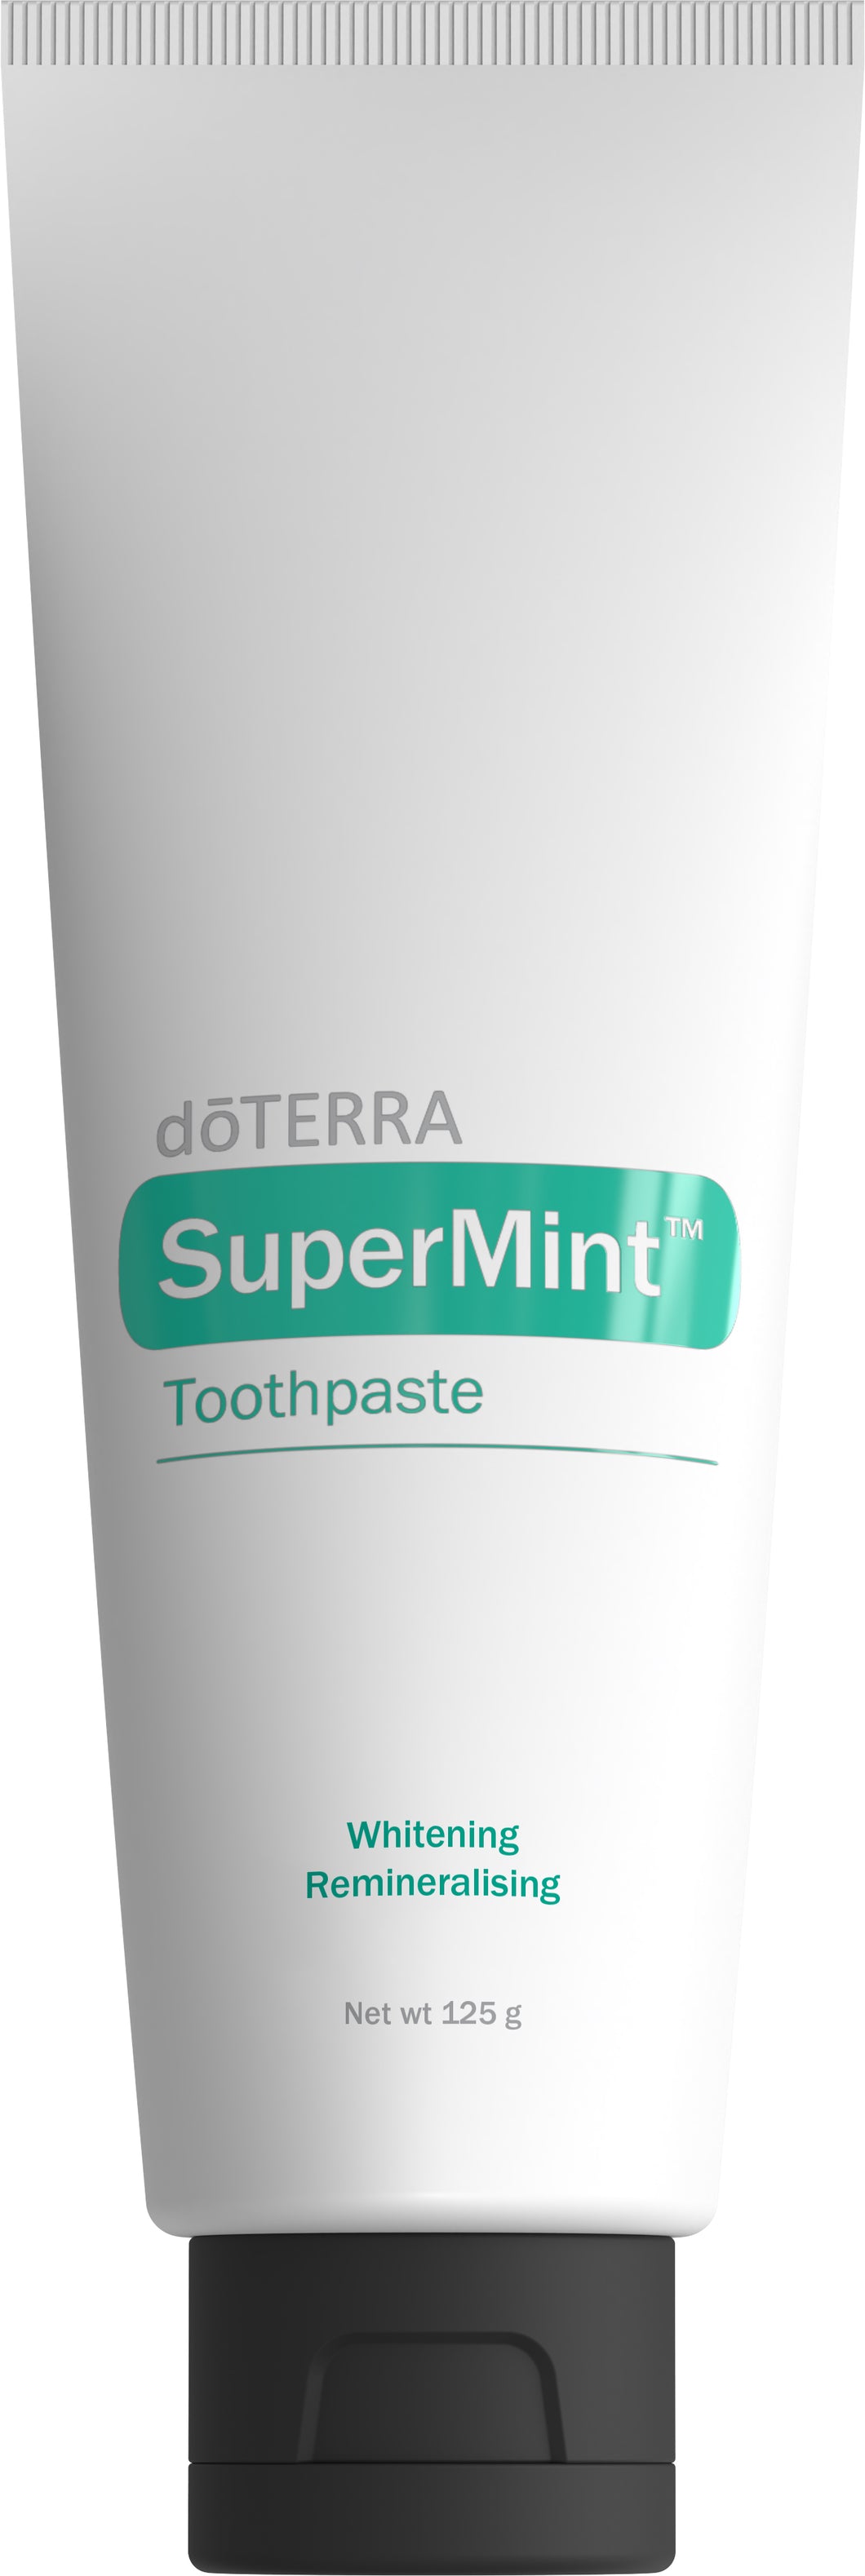 doTERRA SuperMint Toothpaste